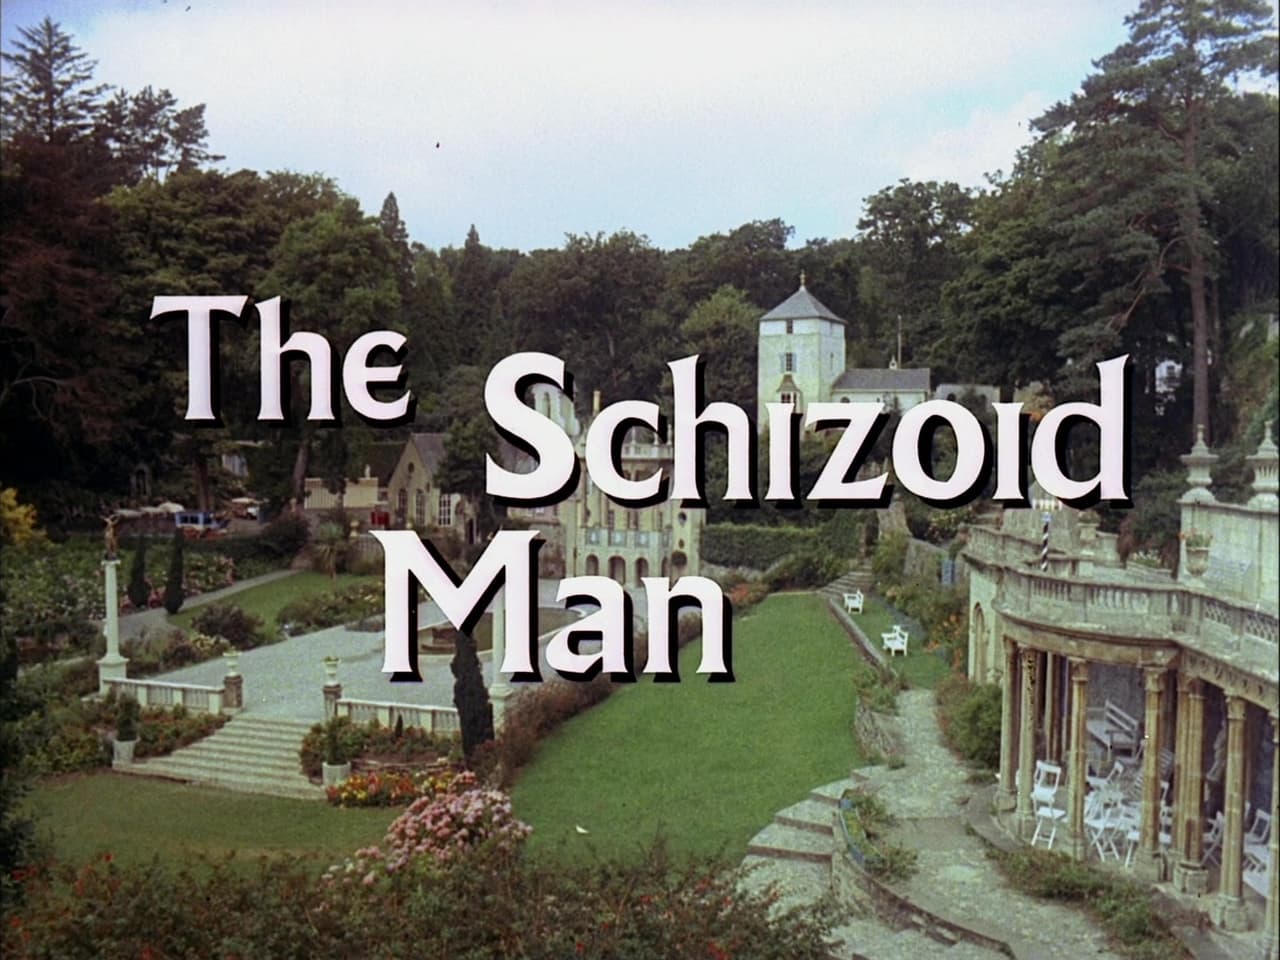 The Schizoid Man